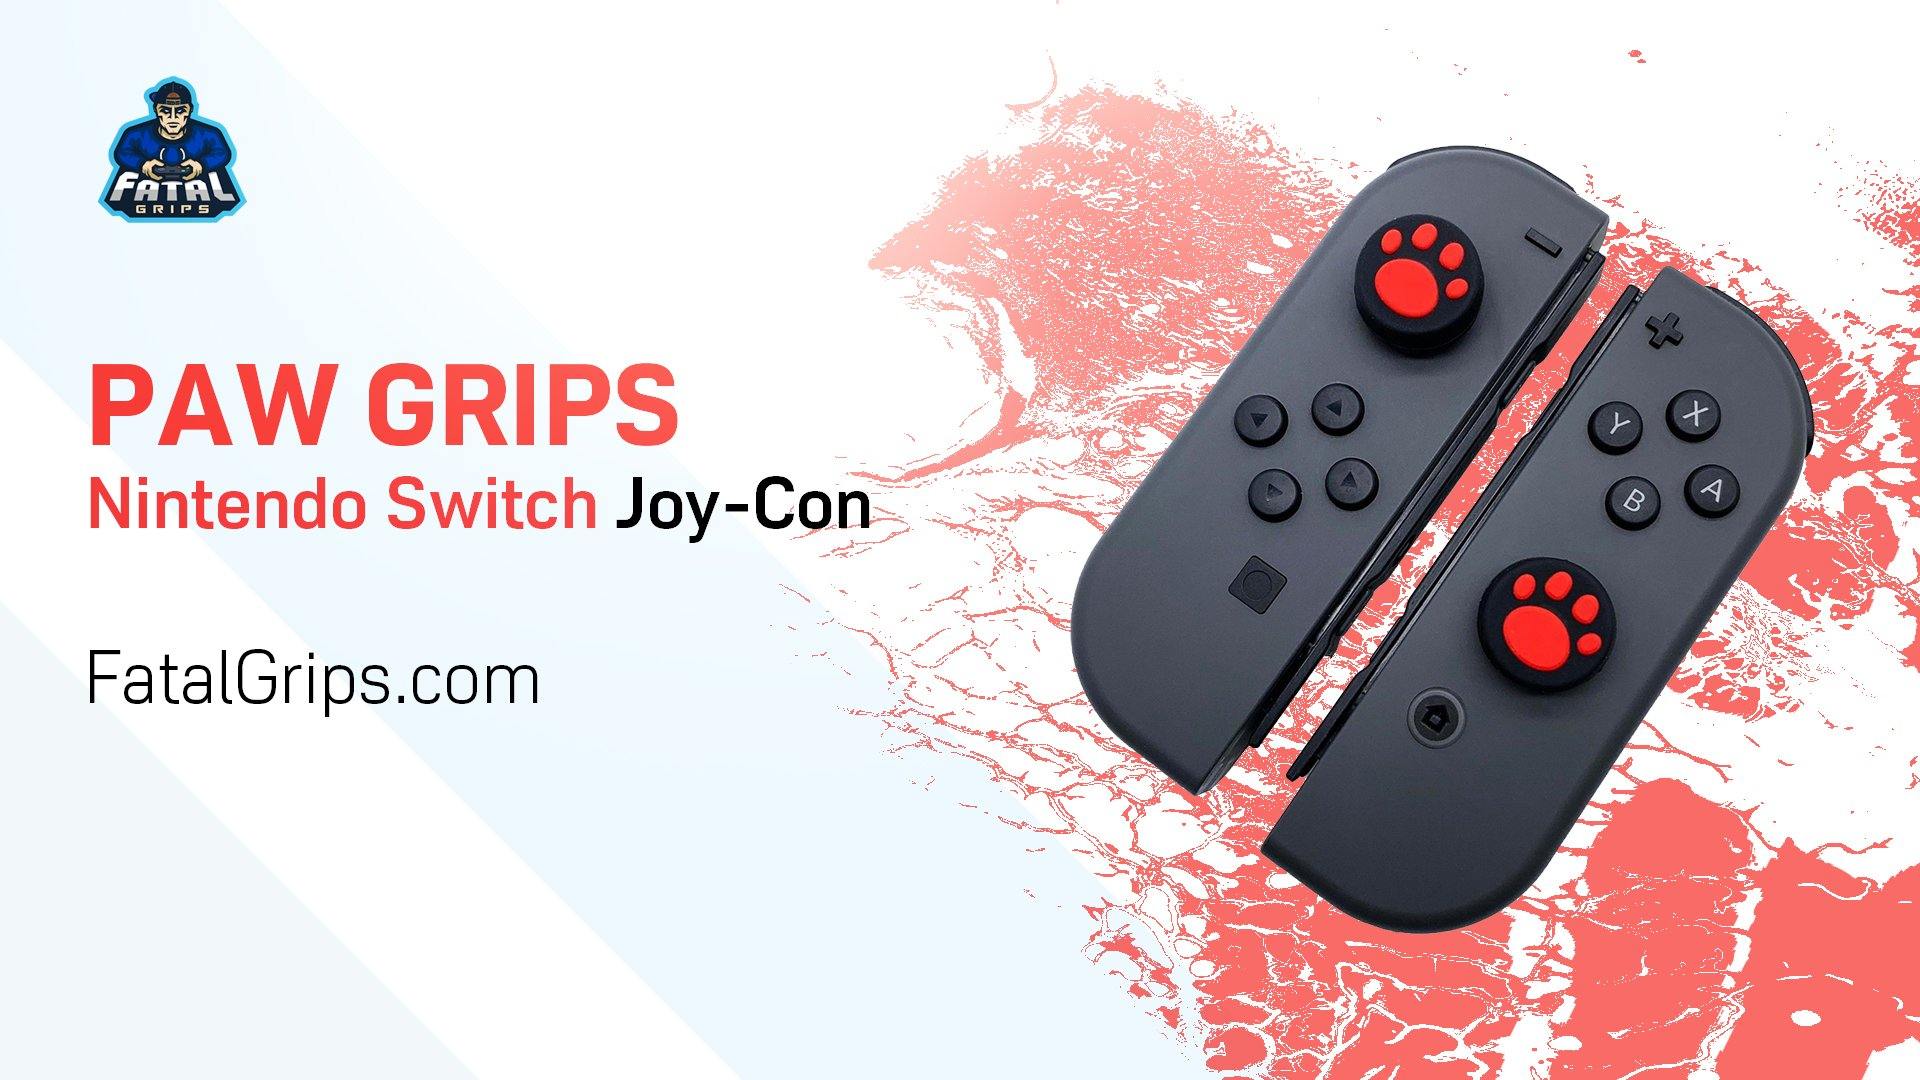 Paw Grips - Nintendo Switch Joy-Con Controller - Fatal Grips